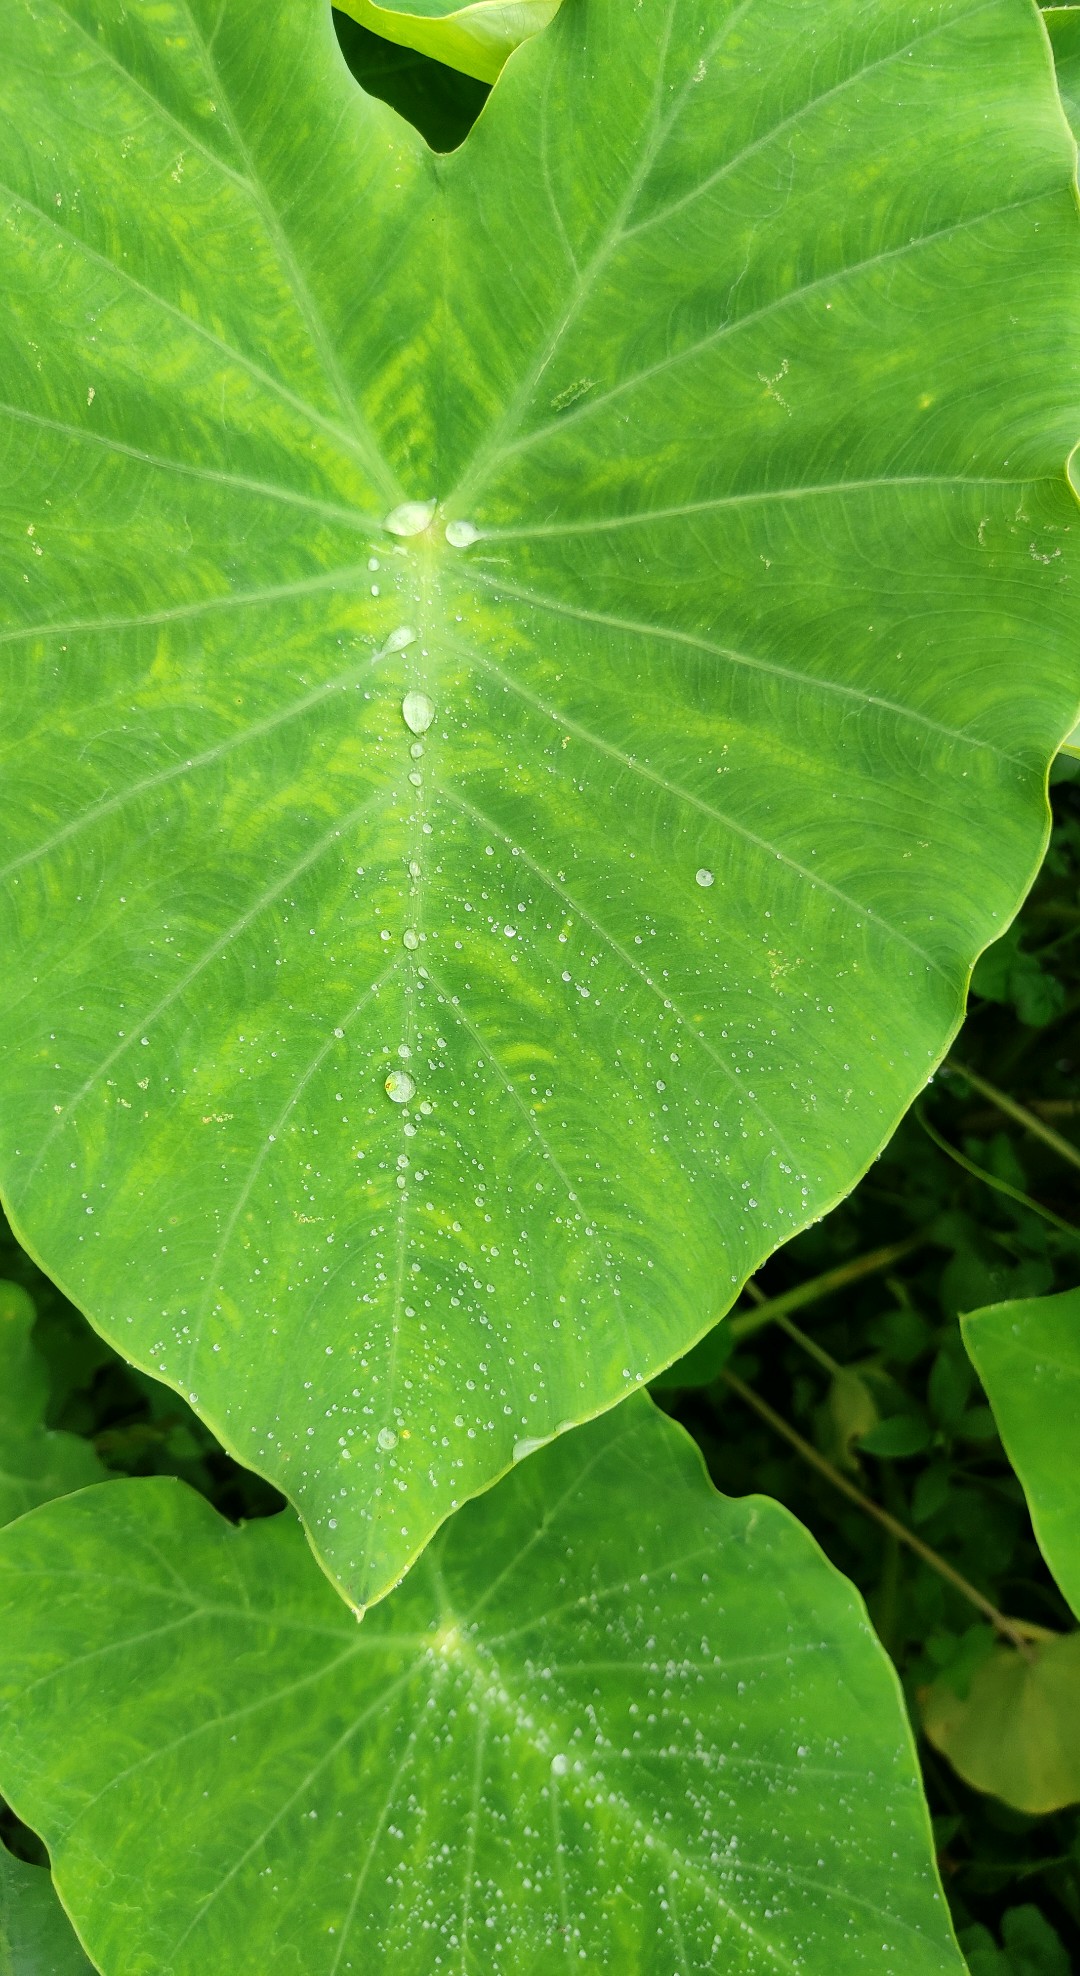 Dew on Heart-shaped leaf